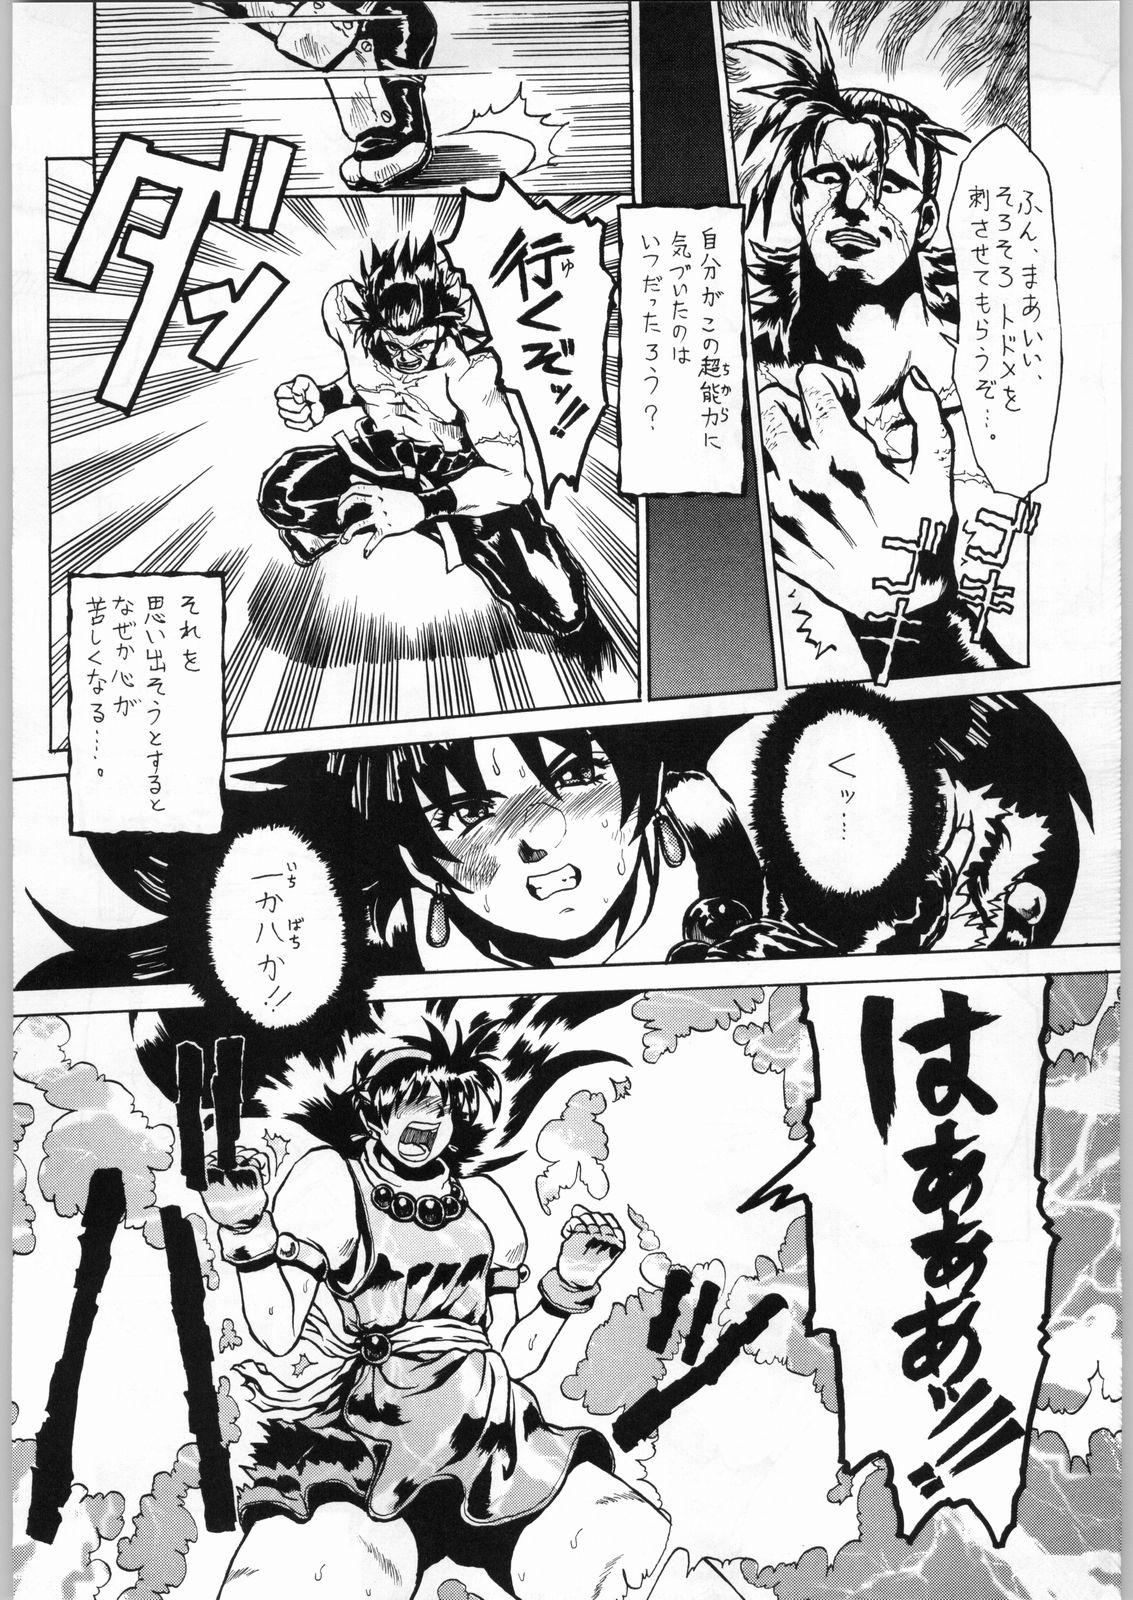 Periscope Shikiyoku Hokkedan 8 - King of fighters Valkyrie no bouken Italiano - Page 6